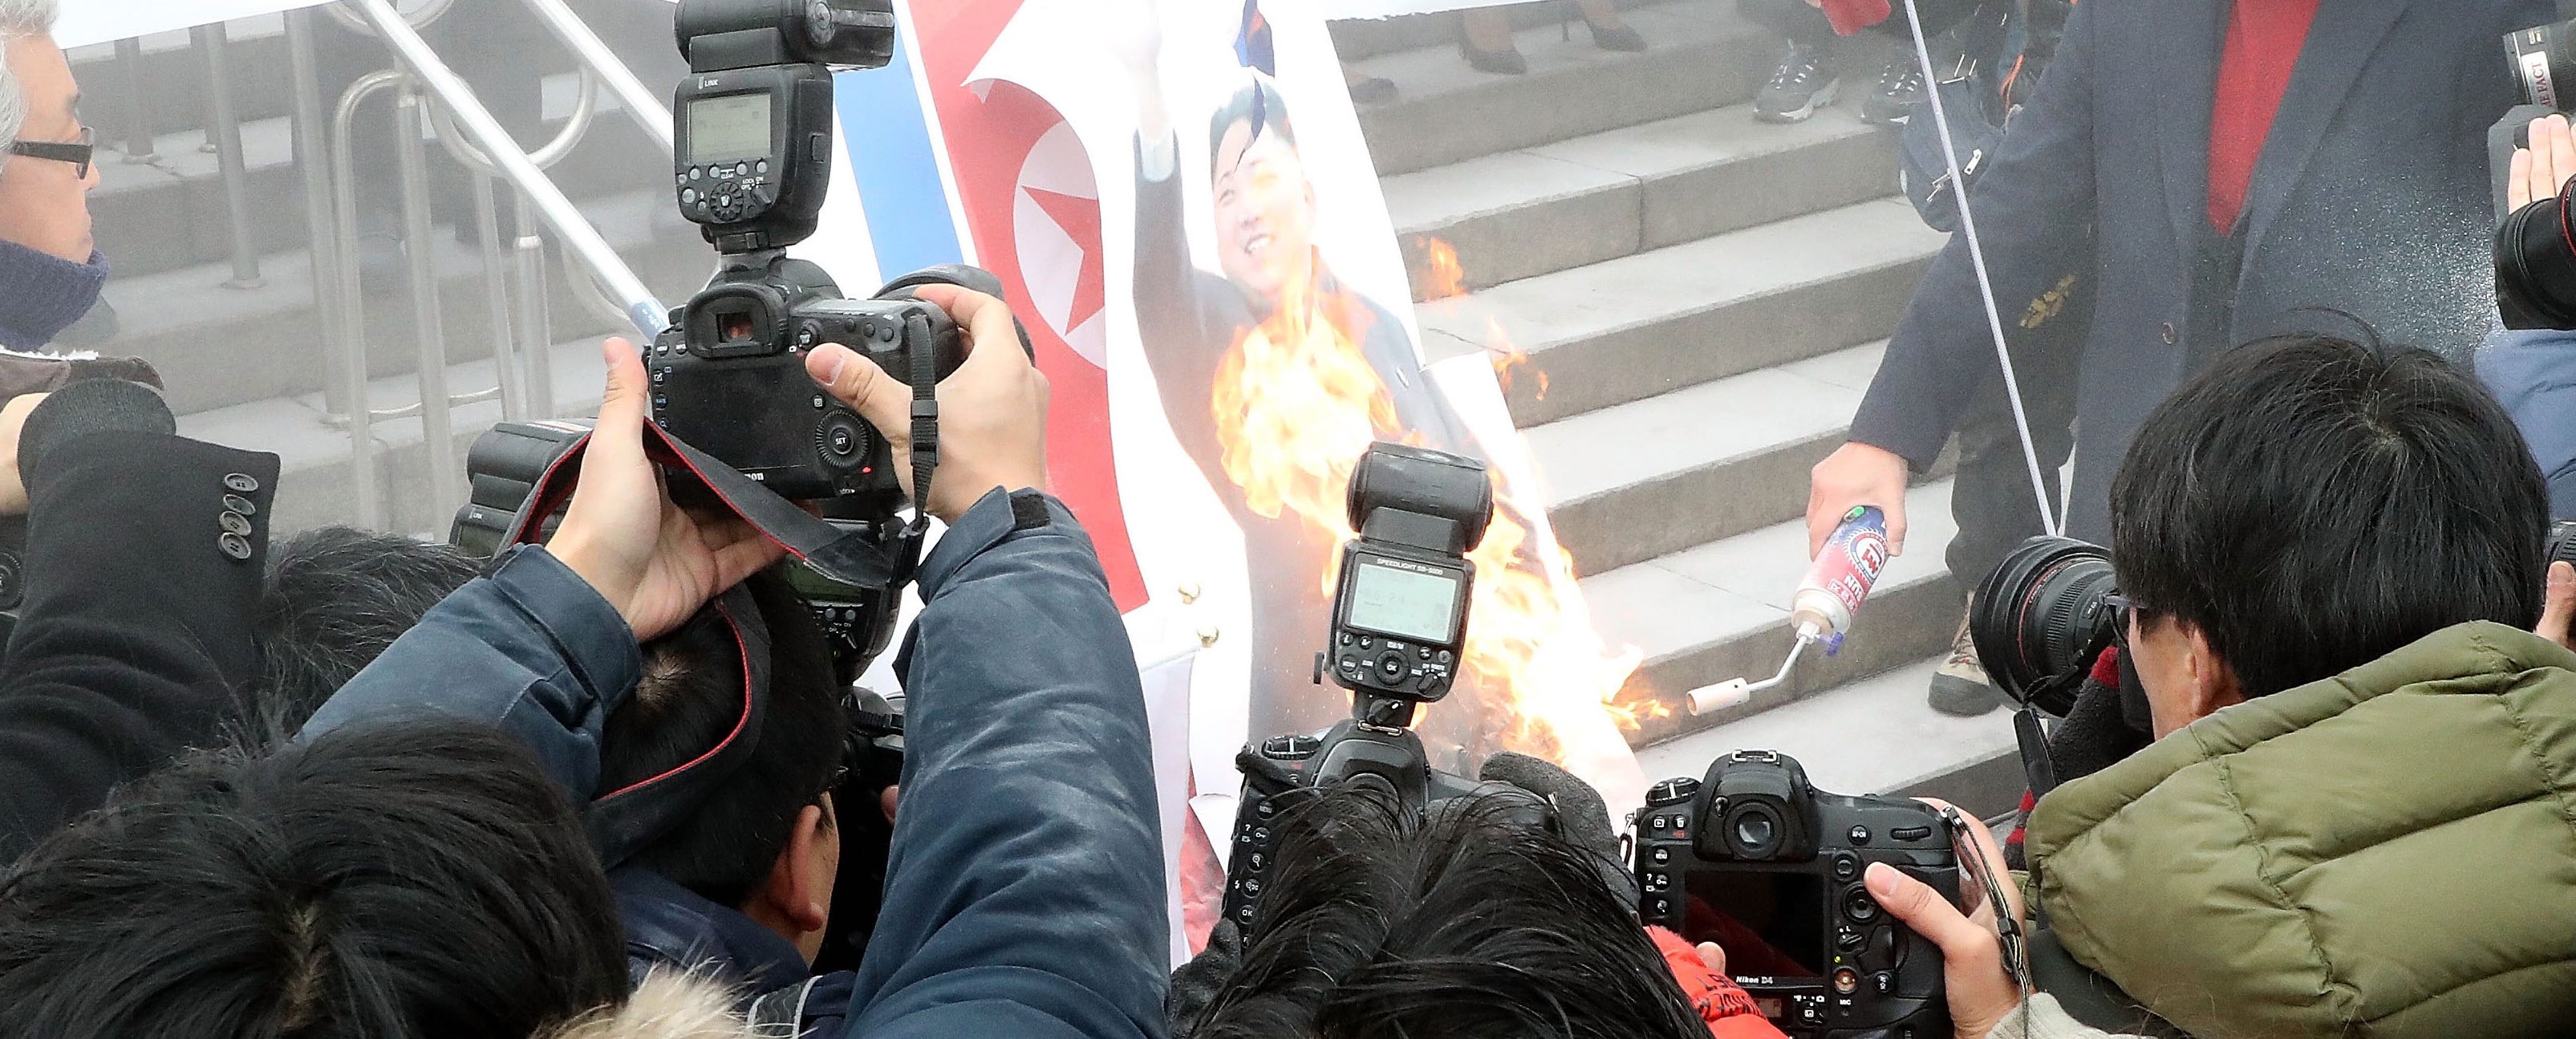 Protesters burn a portrait of North Korean leader Kim Jong-Un in Seoul (Photo: Kim Jae-Myeong/Getty)